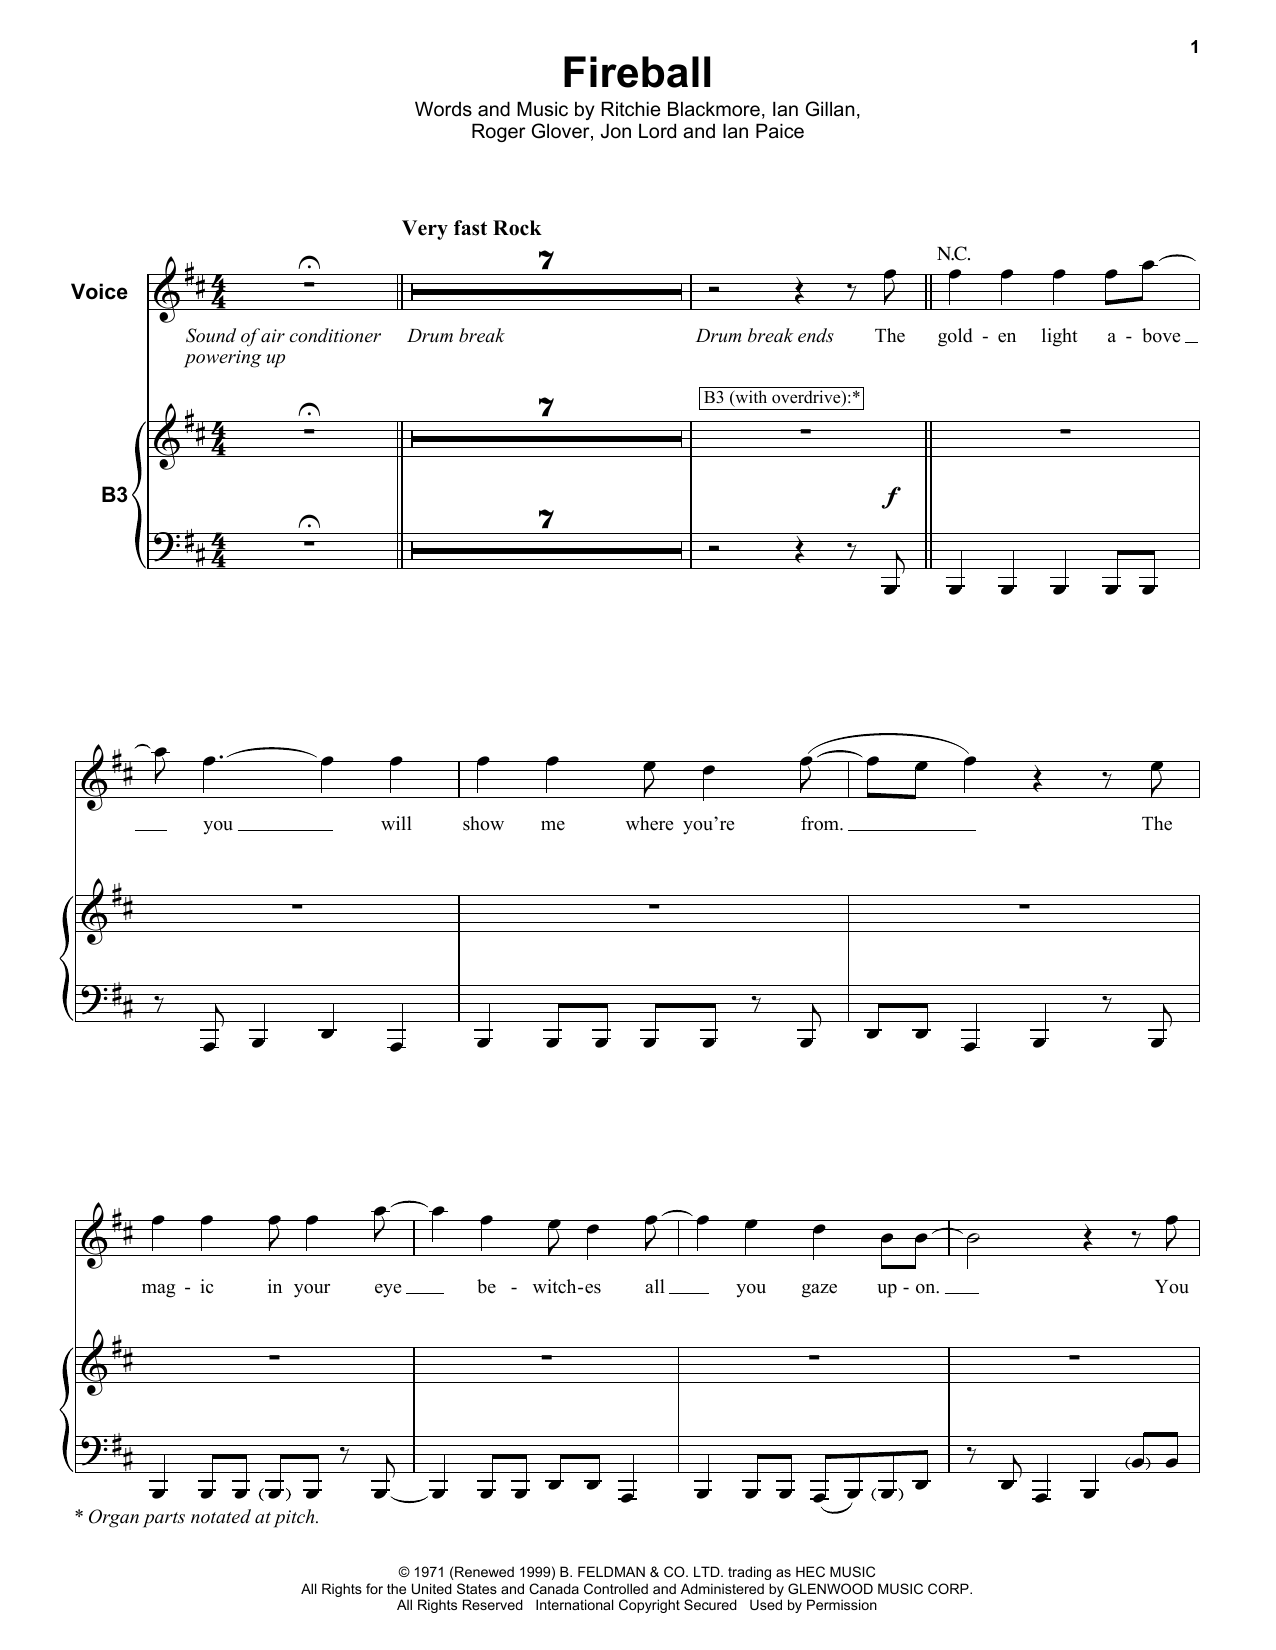 Deep Purple Fireball Sheet Music Notes & Chords for Guitar Tab (Single Guitar) - Download or Print PDF